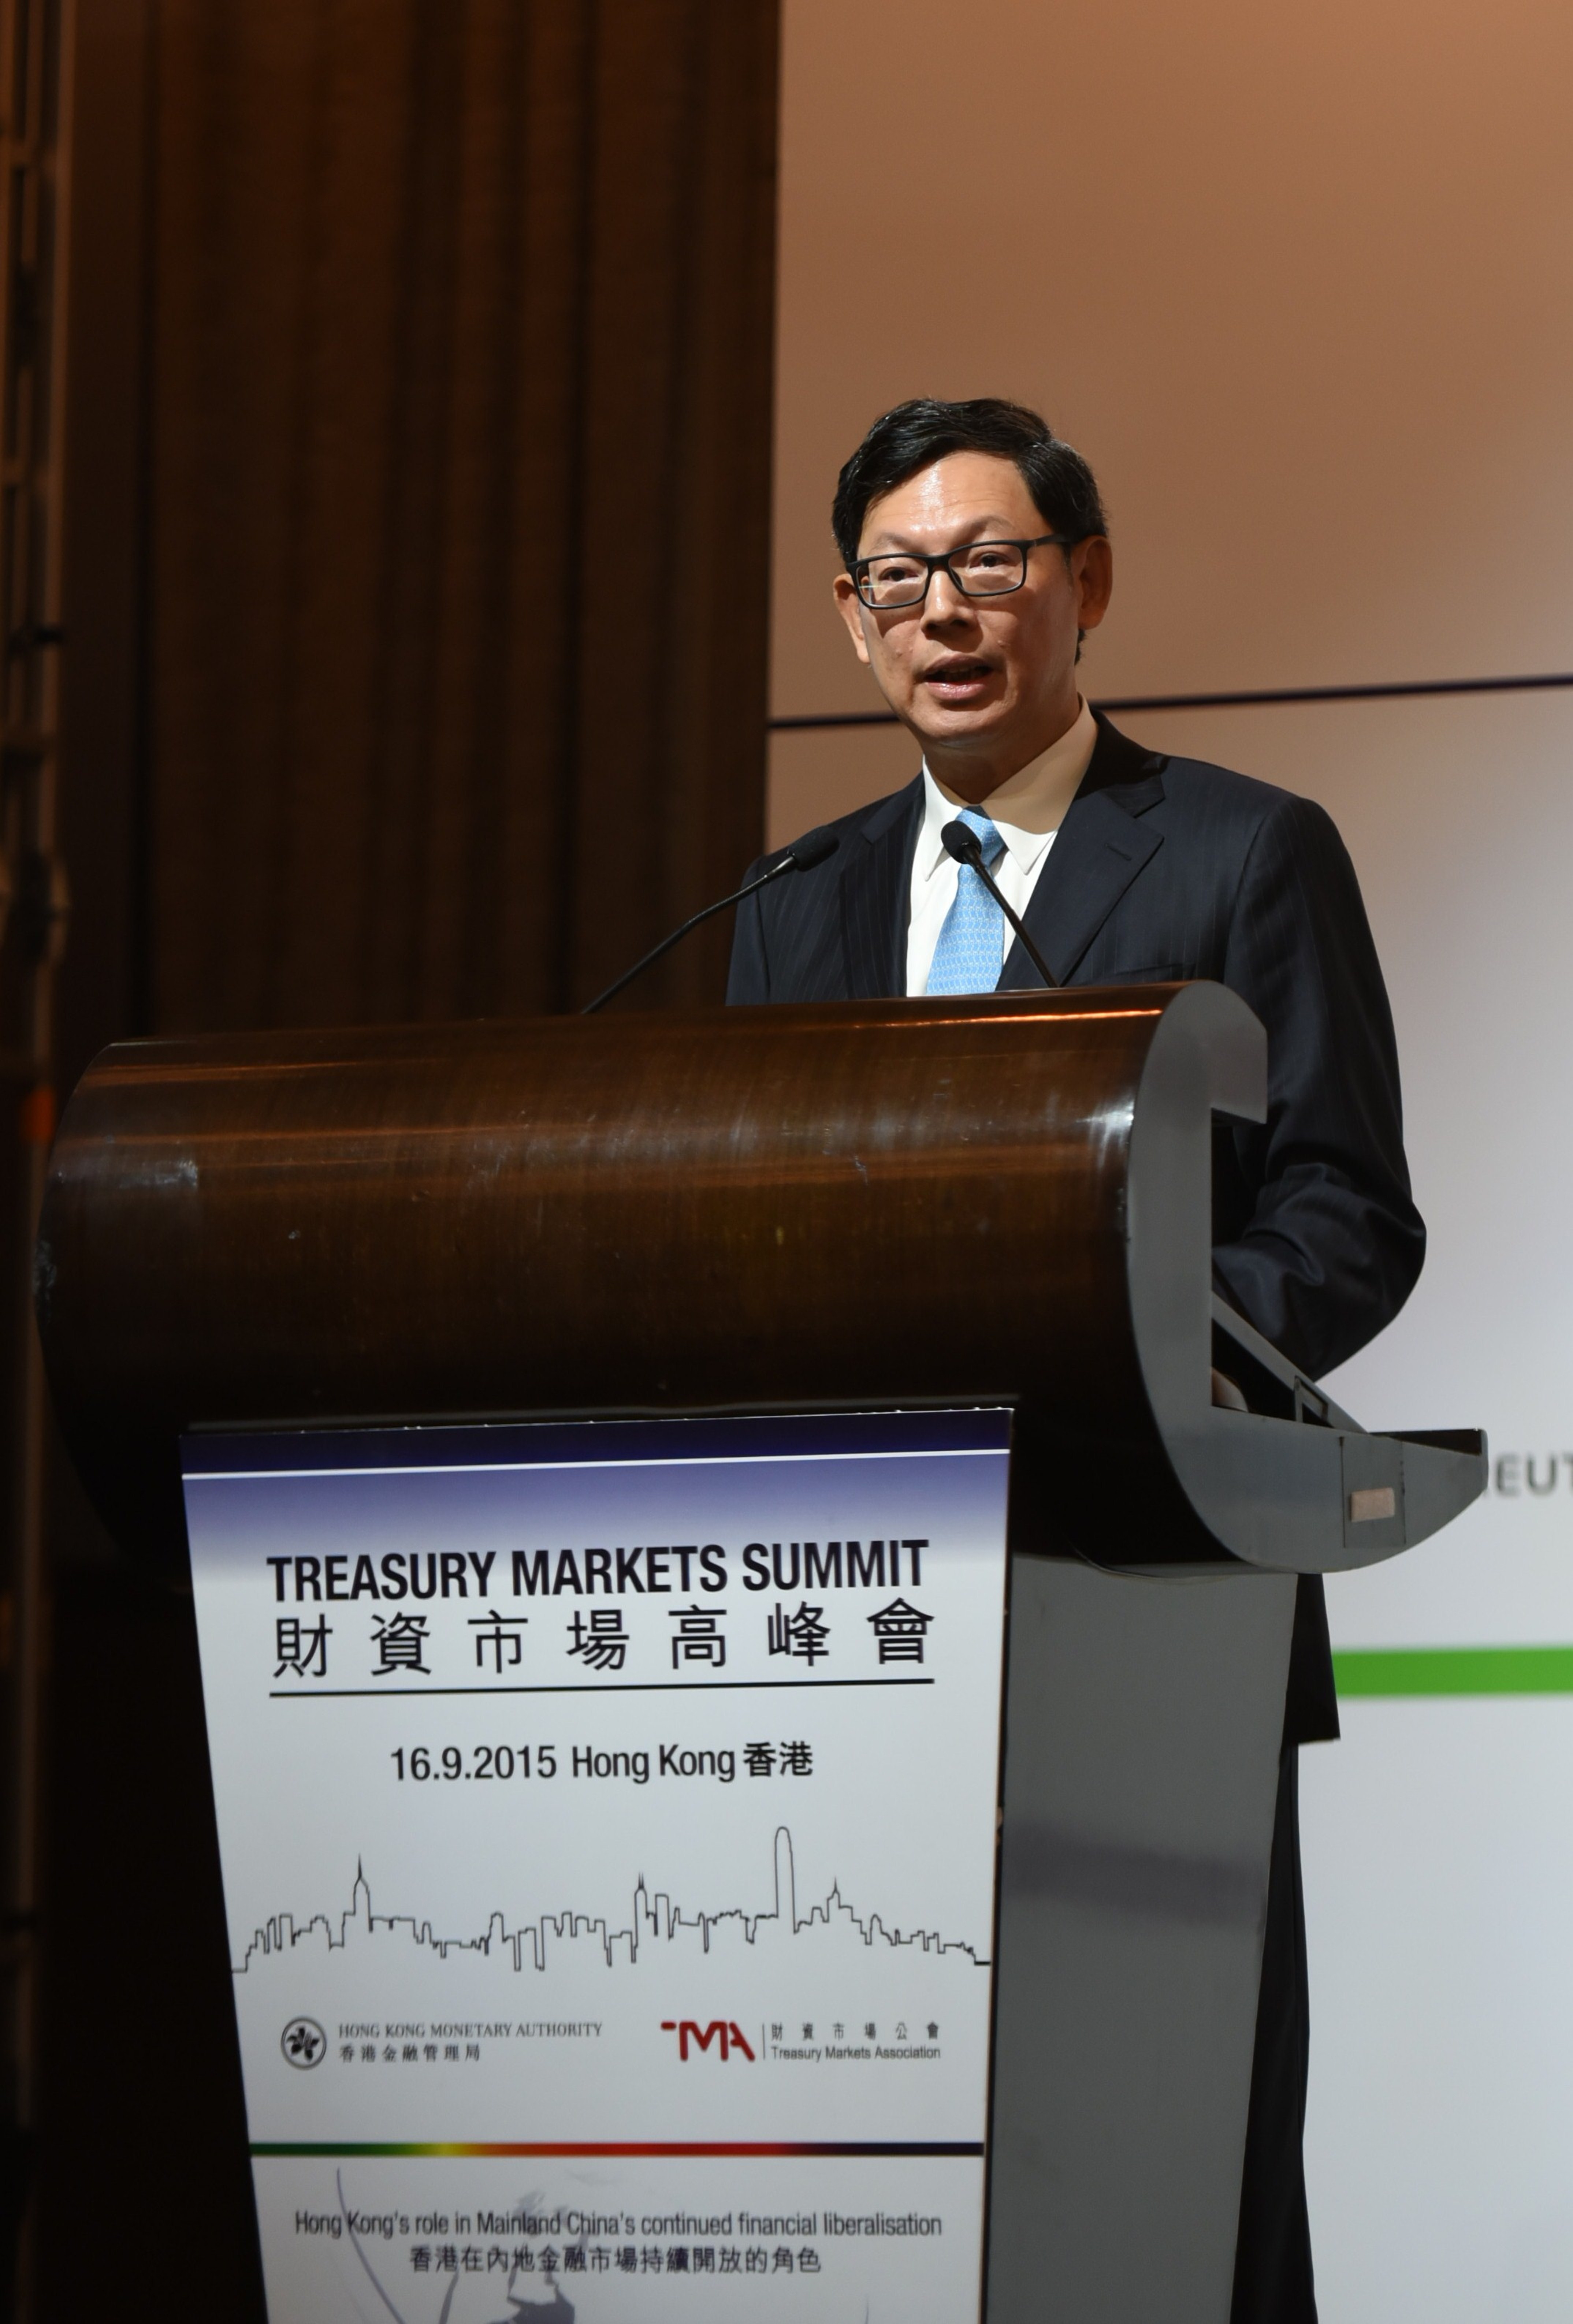 Mr Norman T.L. Chan, Chief Executive of the Hong Kong Monetary Authority, gives the keynote speech at the Treasury Markets Summit 2015 held in Hong Kong.